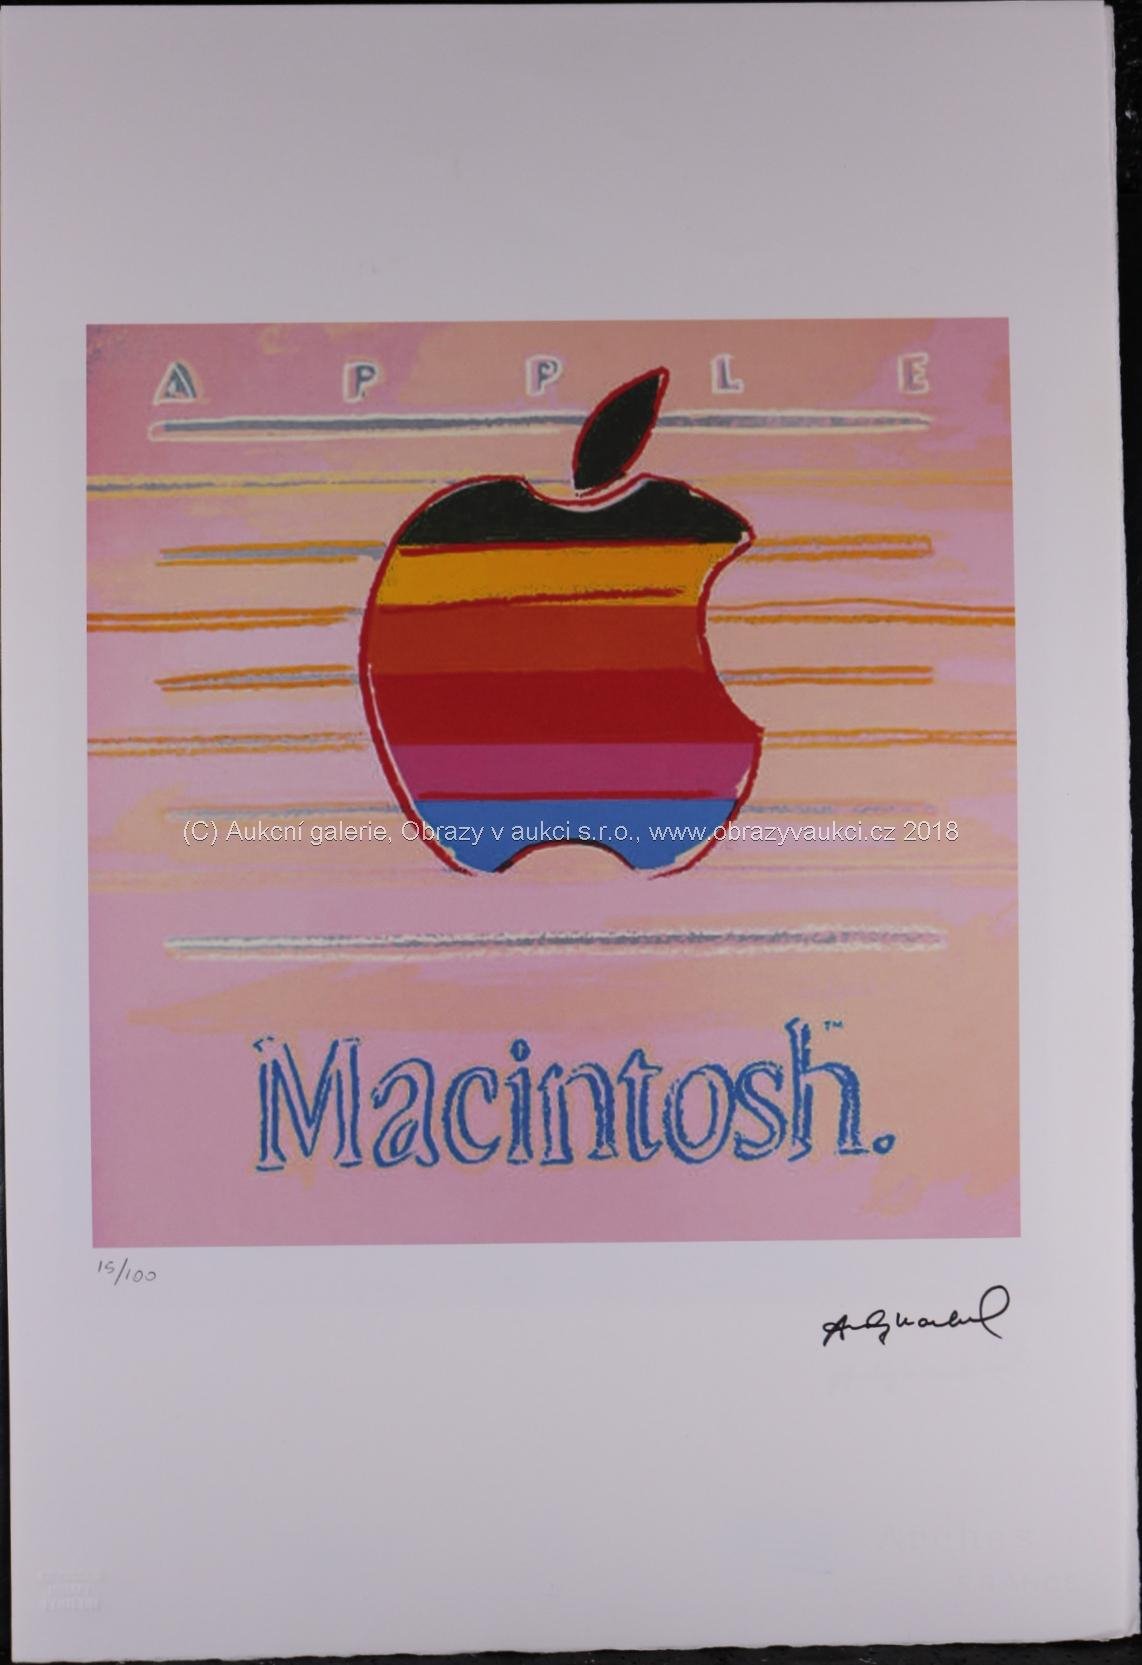 Andy Warhol - Apple - Macintosh